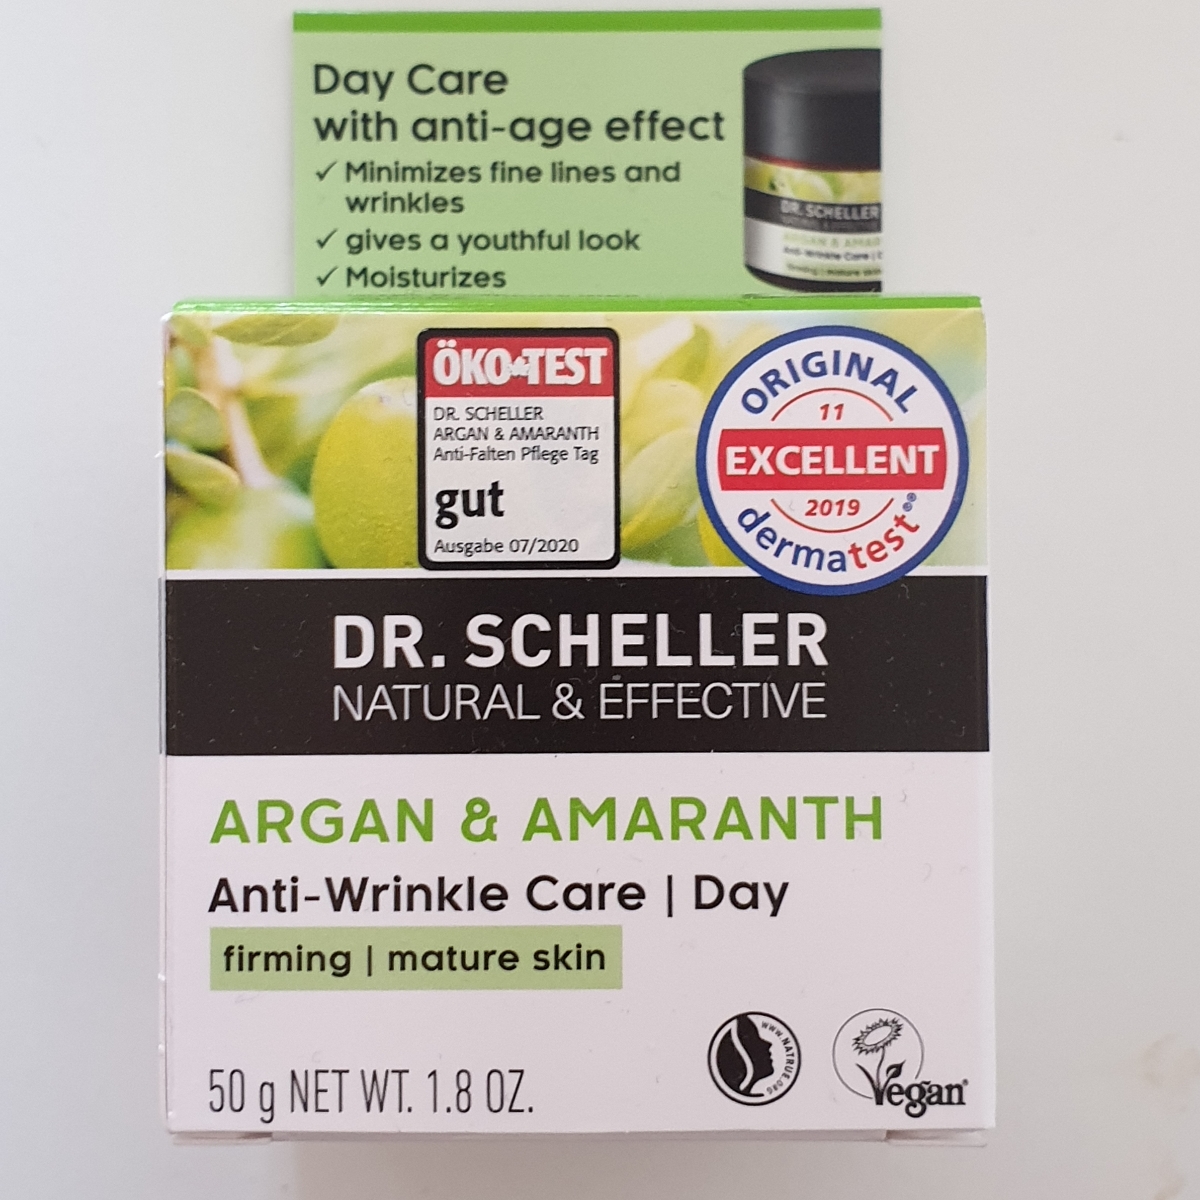 Dr. Scheller ARGAN & AMARANTH Anti-Wrinkle Care